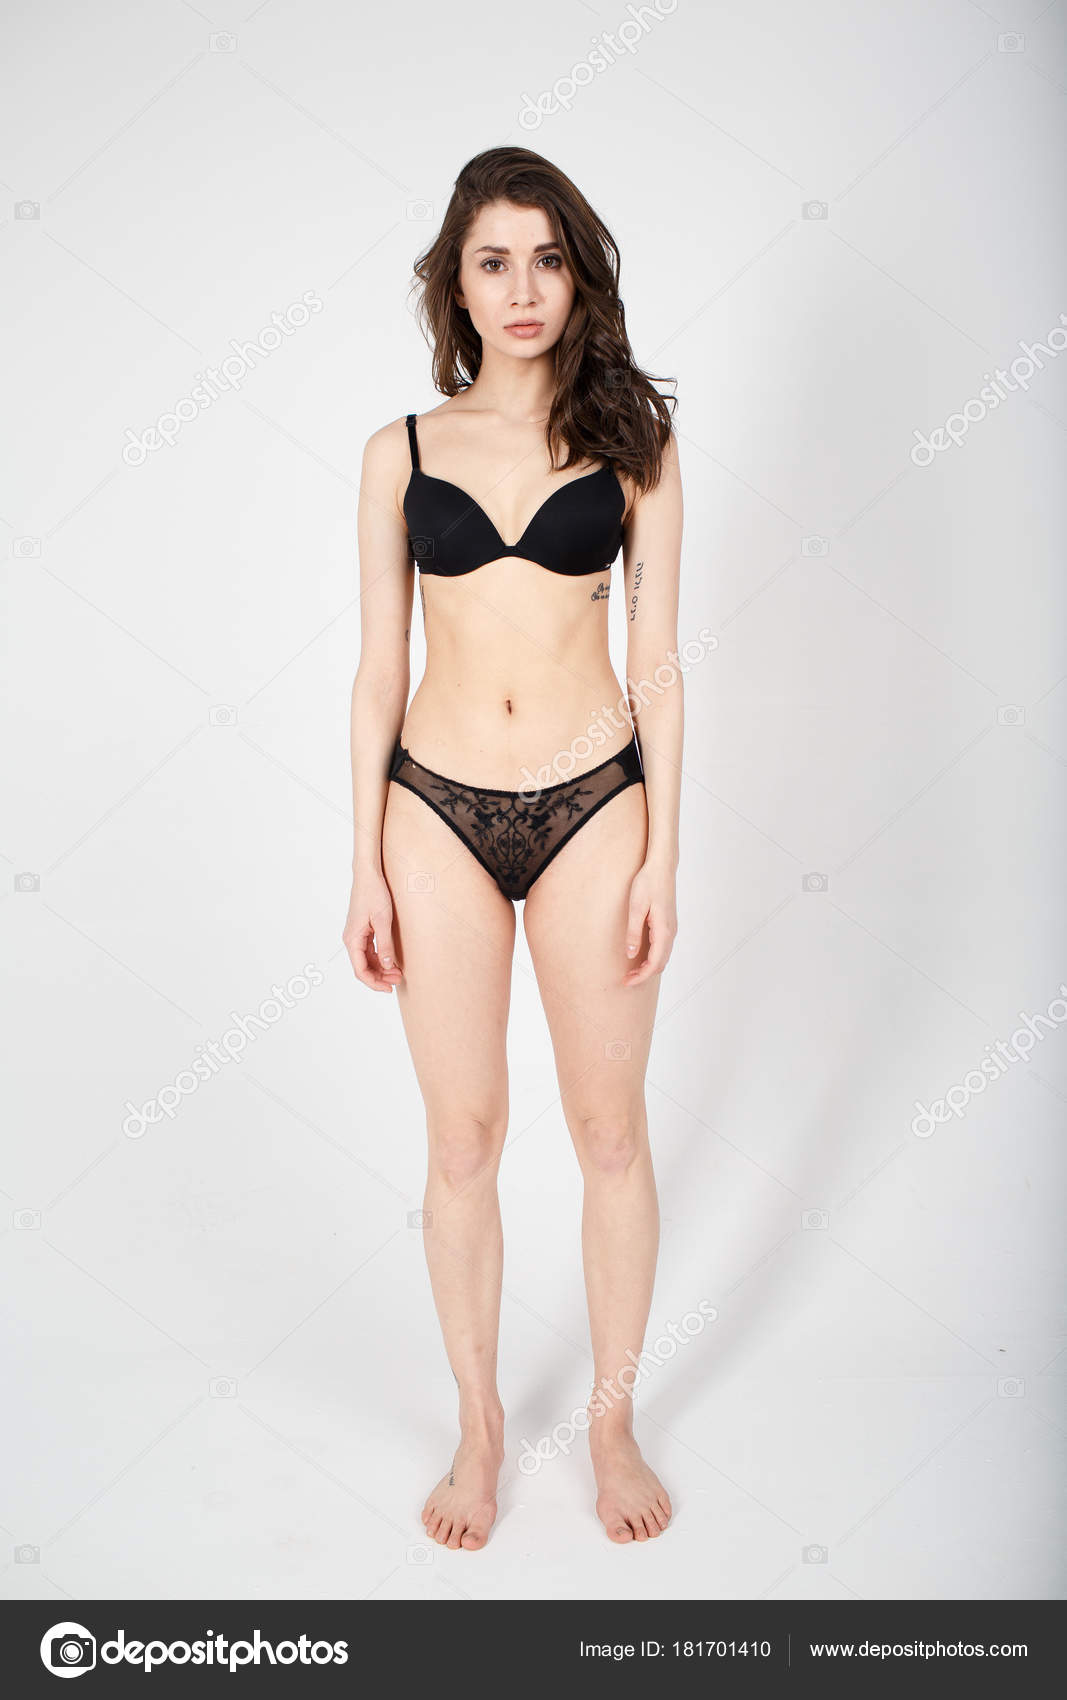 https://st3.depositphotos.com/6544182/18170/i/1600/depositphotos_181701410-stock-photo-beauty-young-girl-model-underwear.jpg